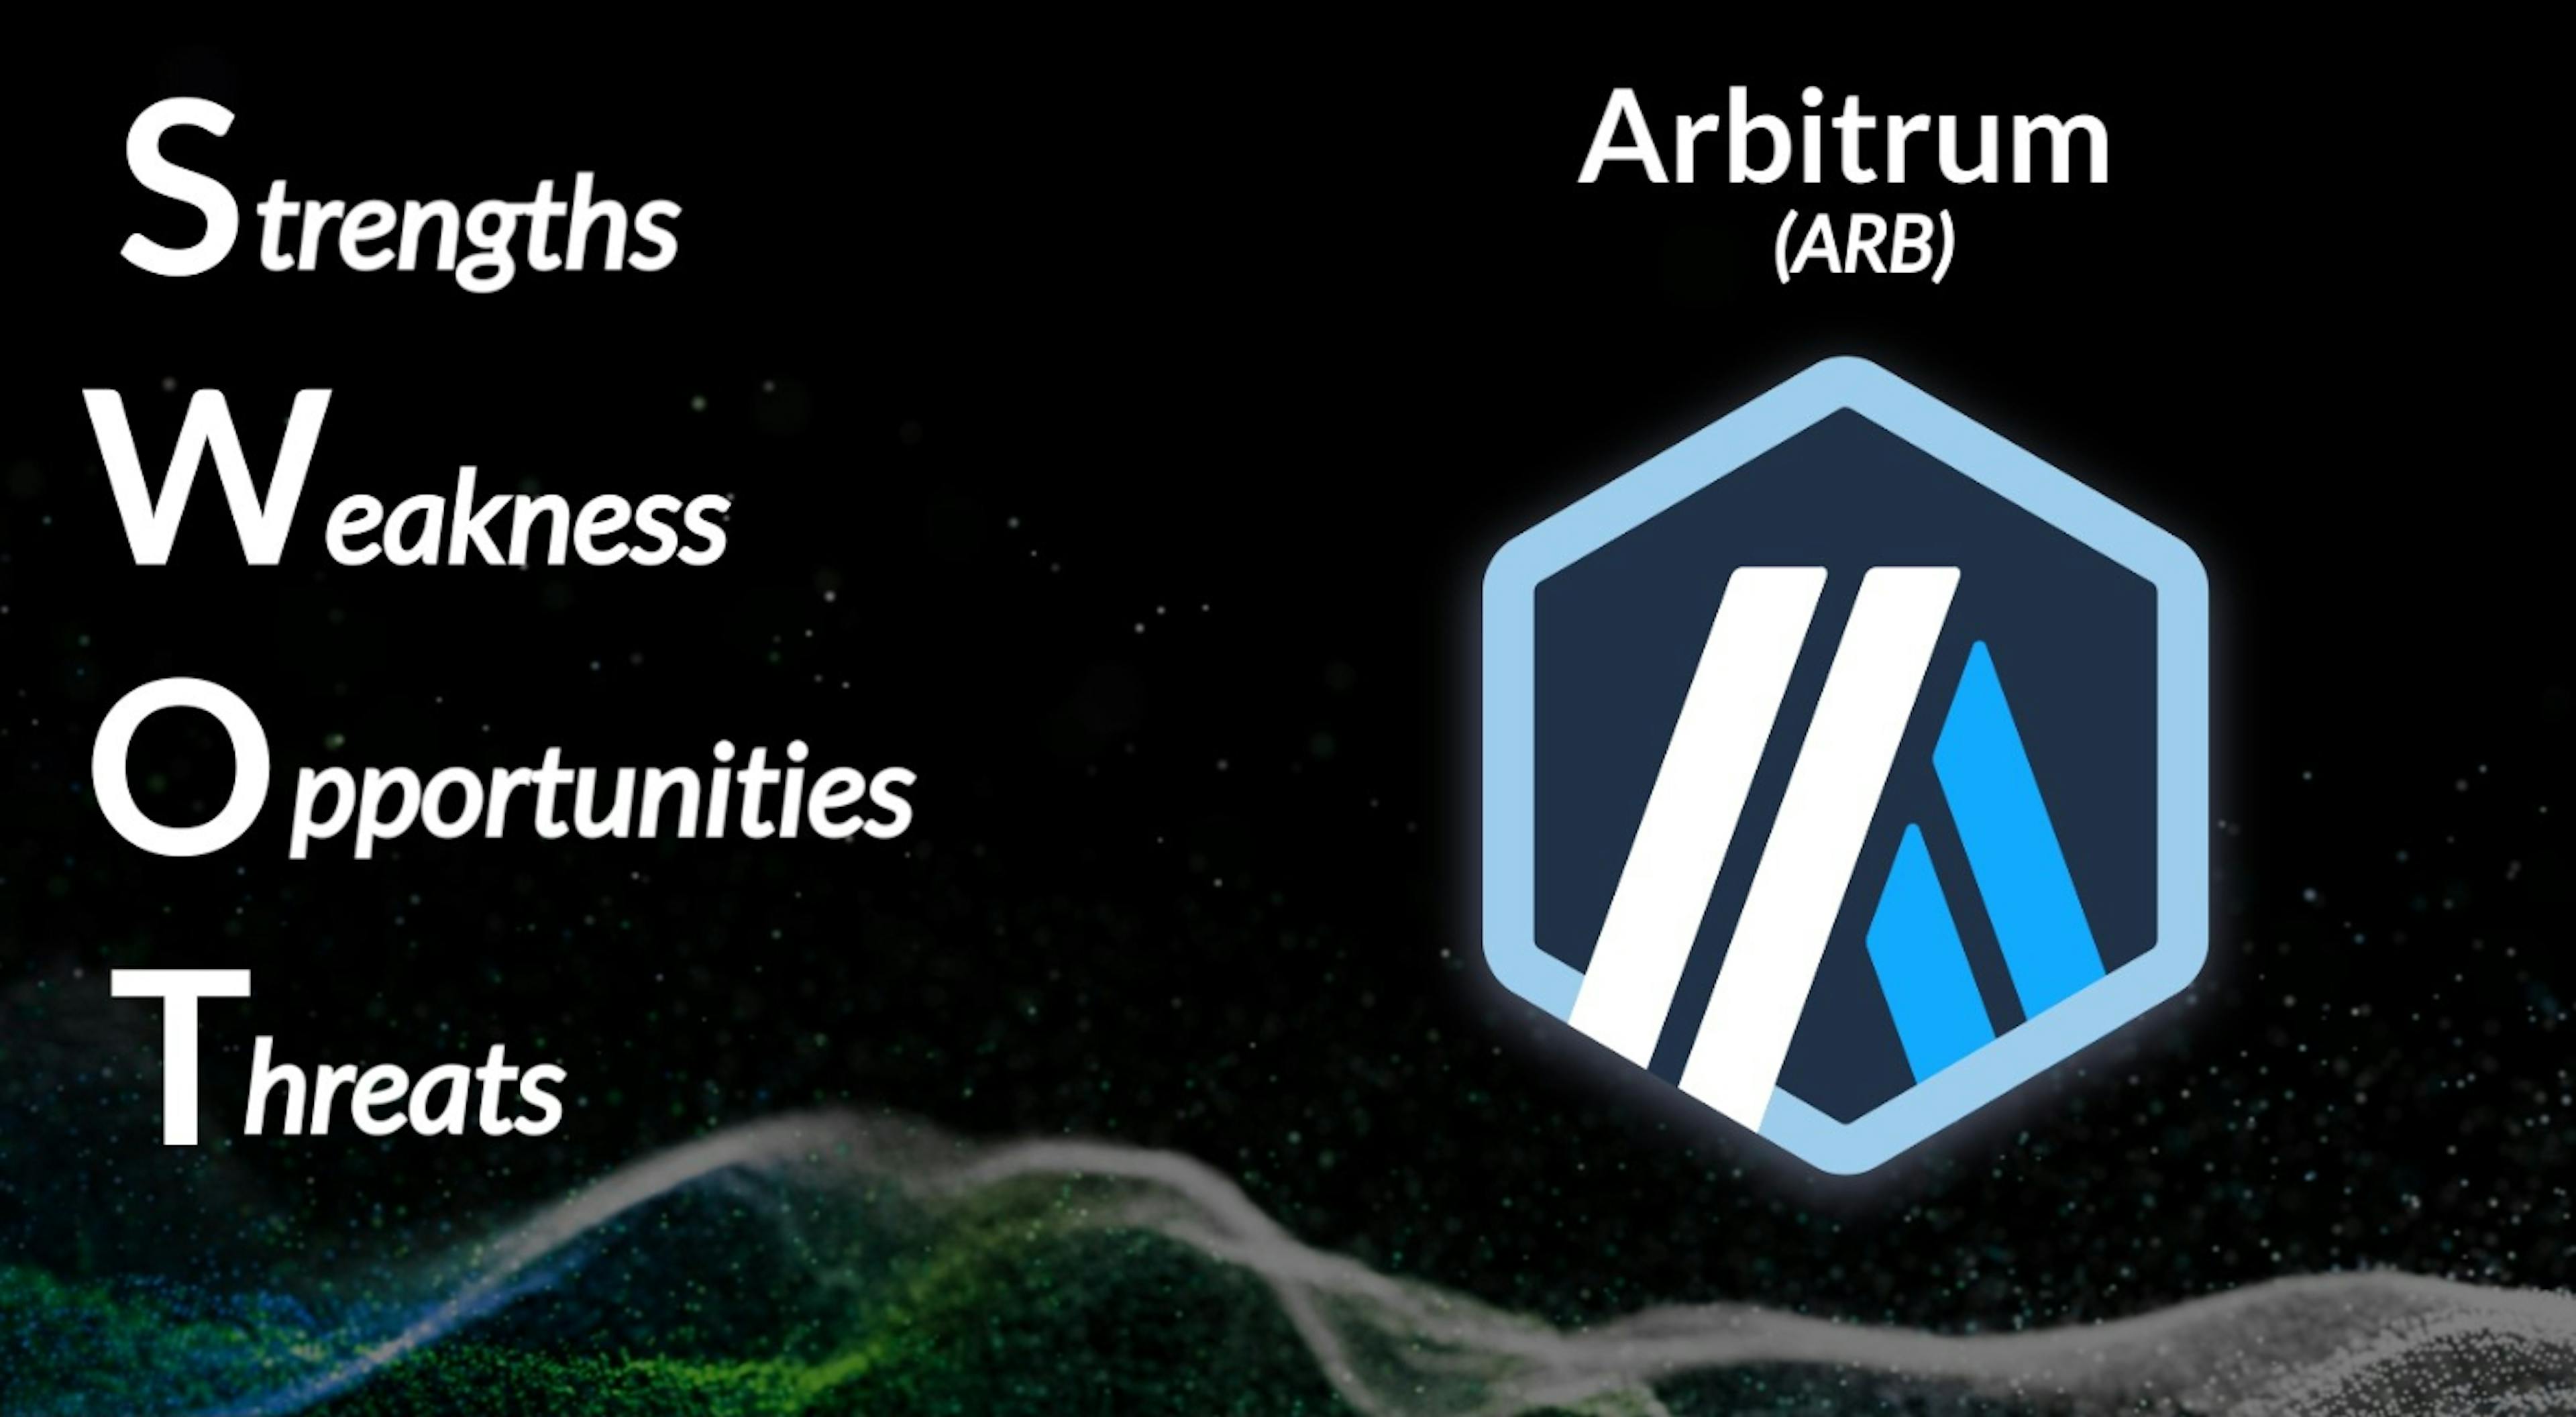 featured image - The Arbitrum (ARB) SWOT Analysis